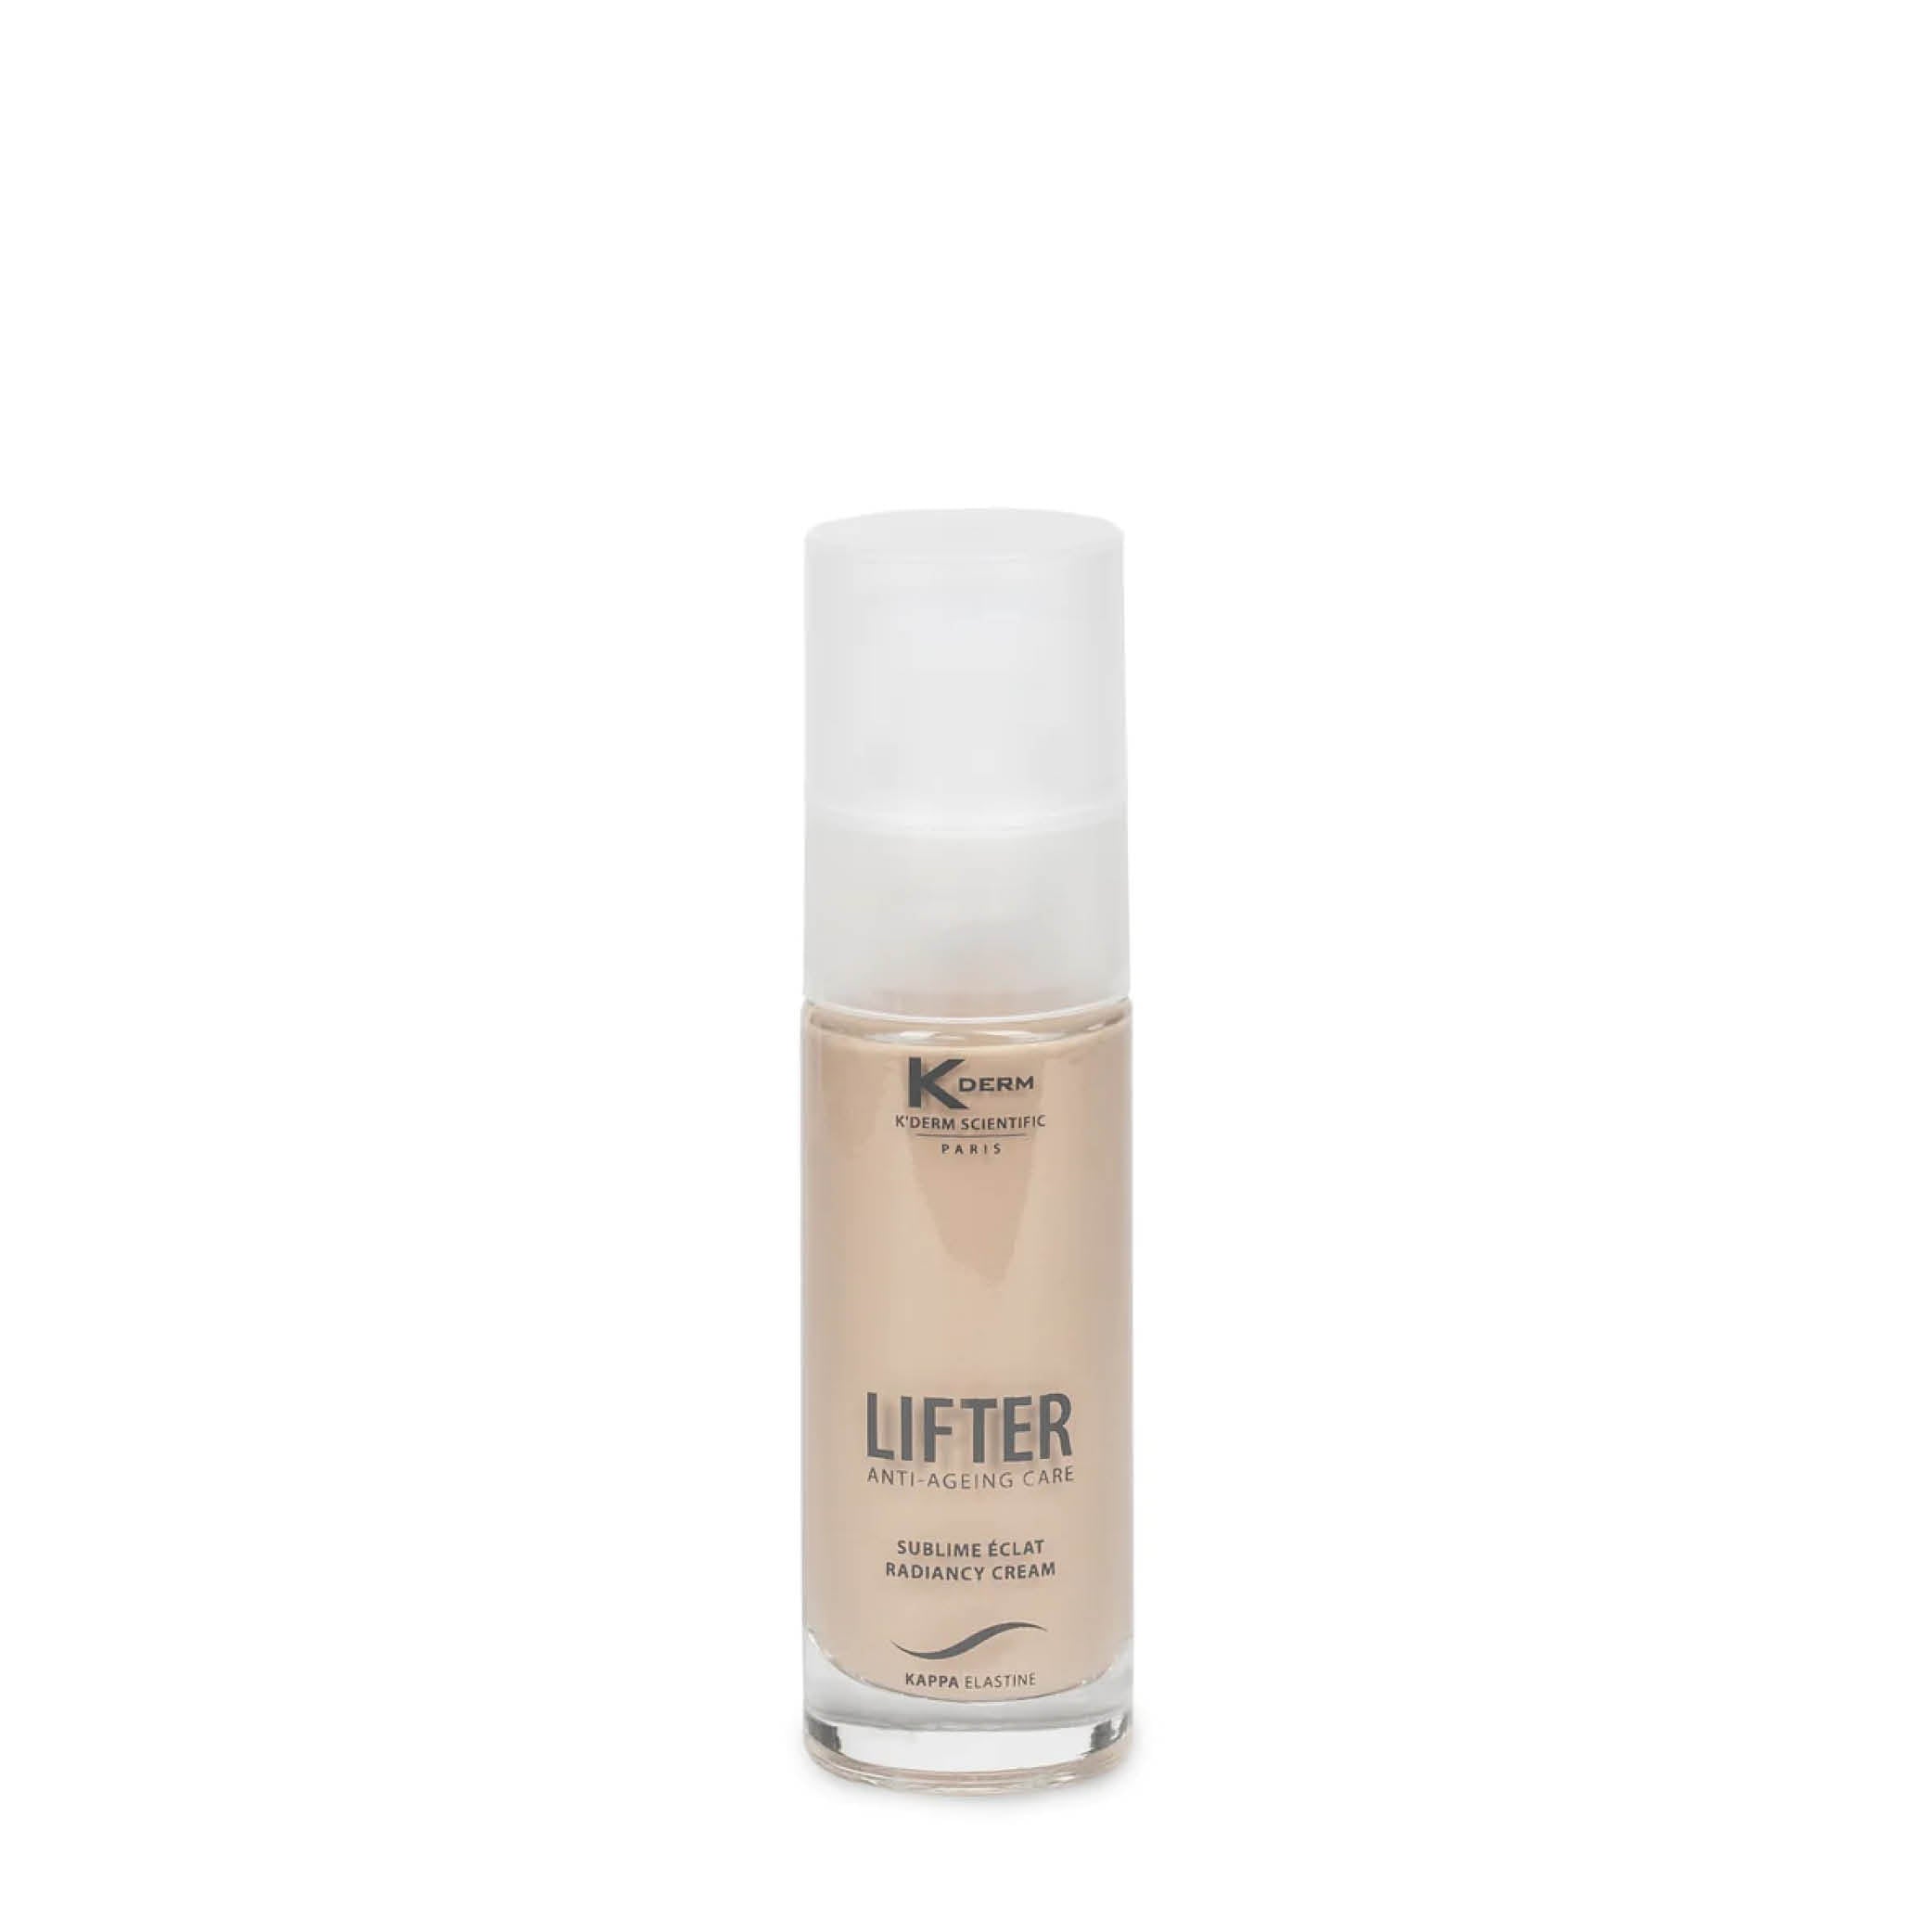 Lifter Radiance Cream